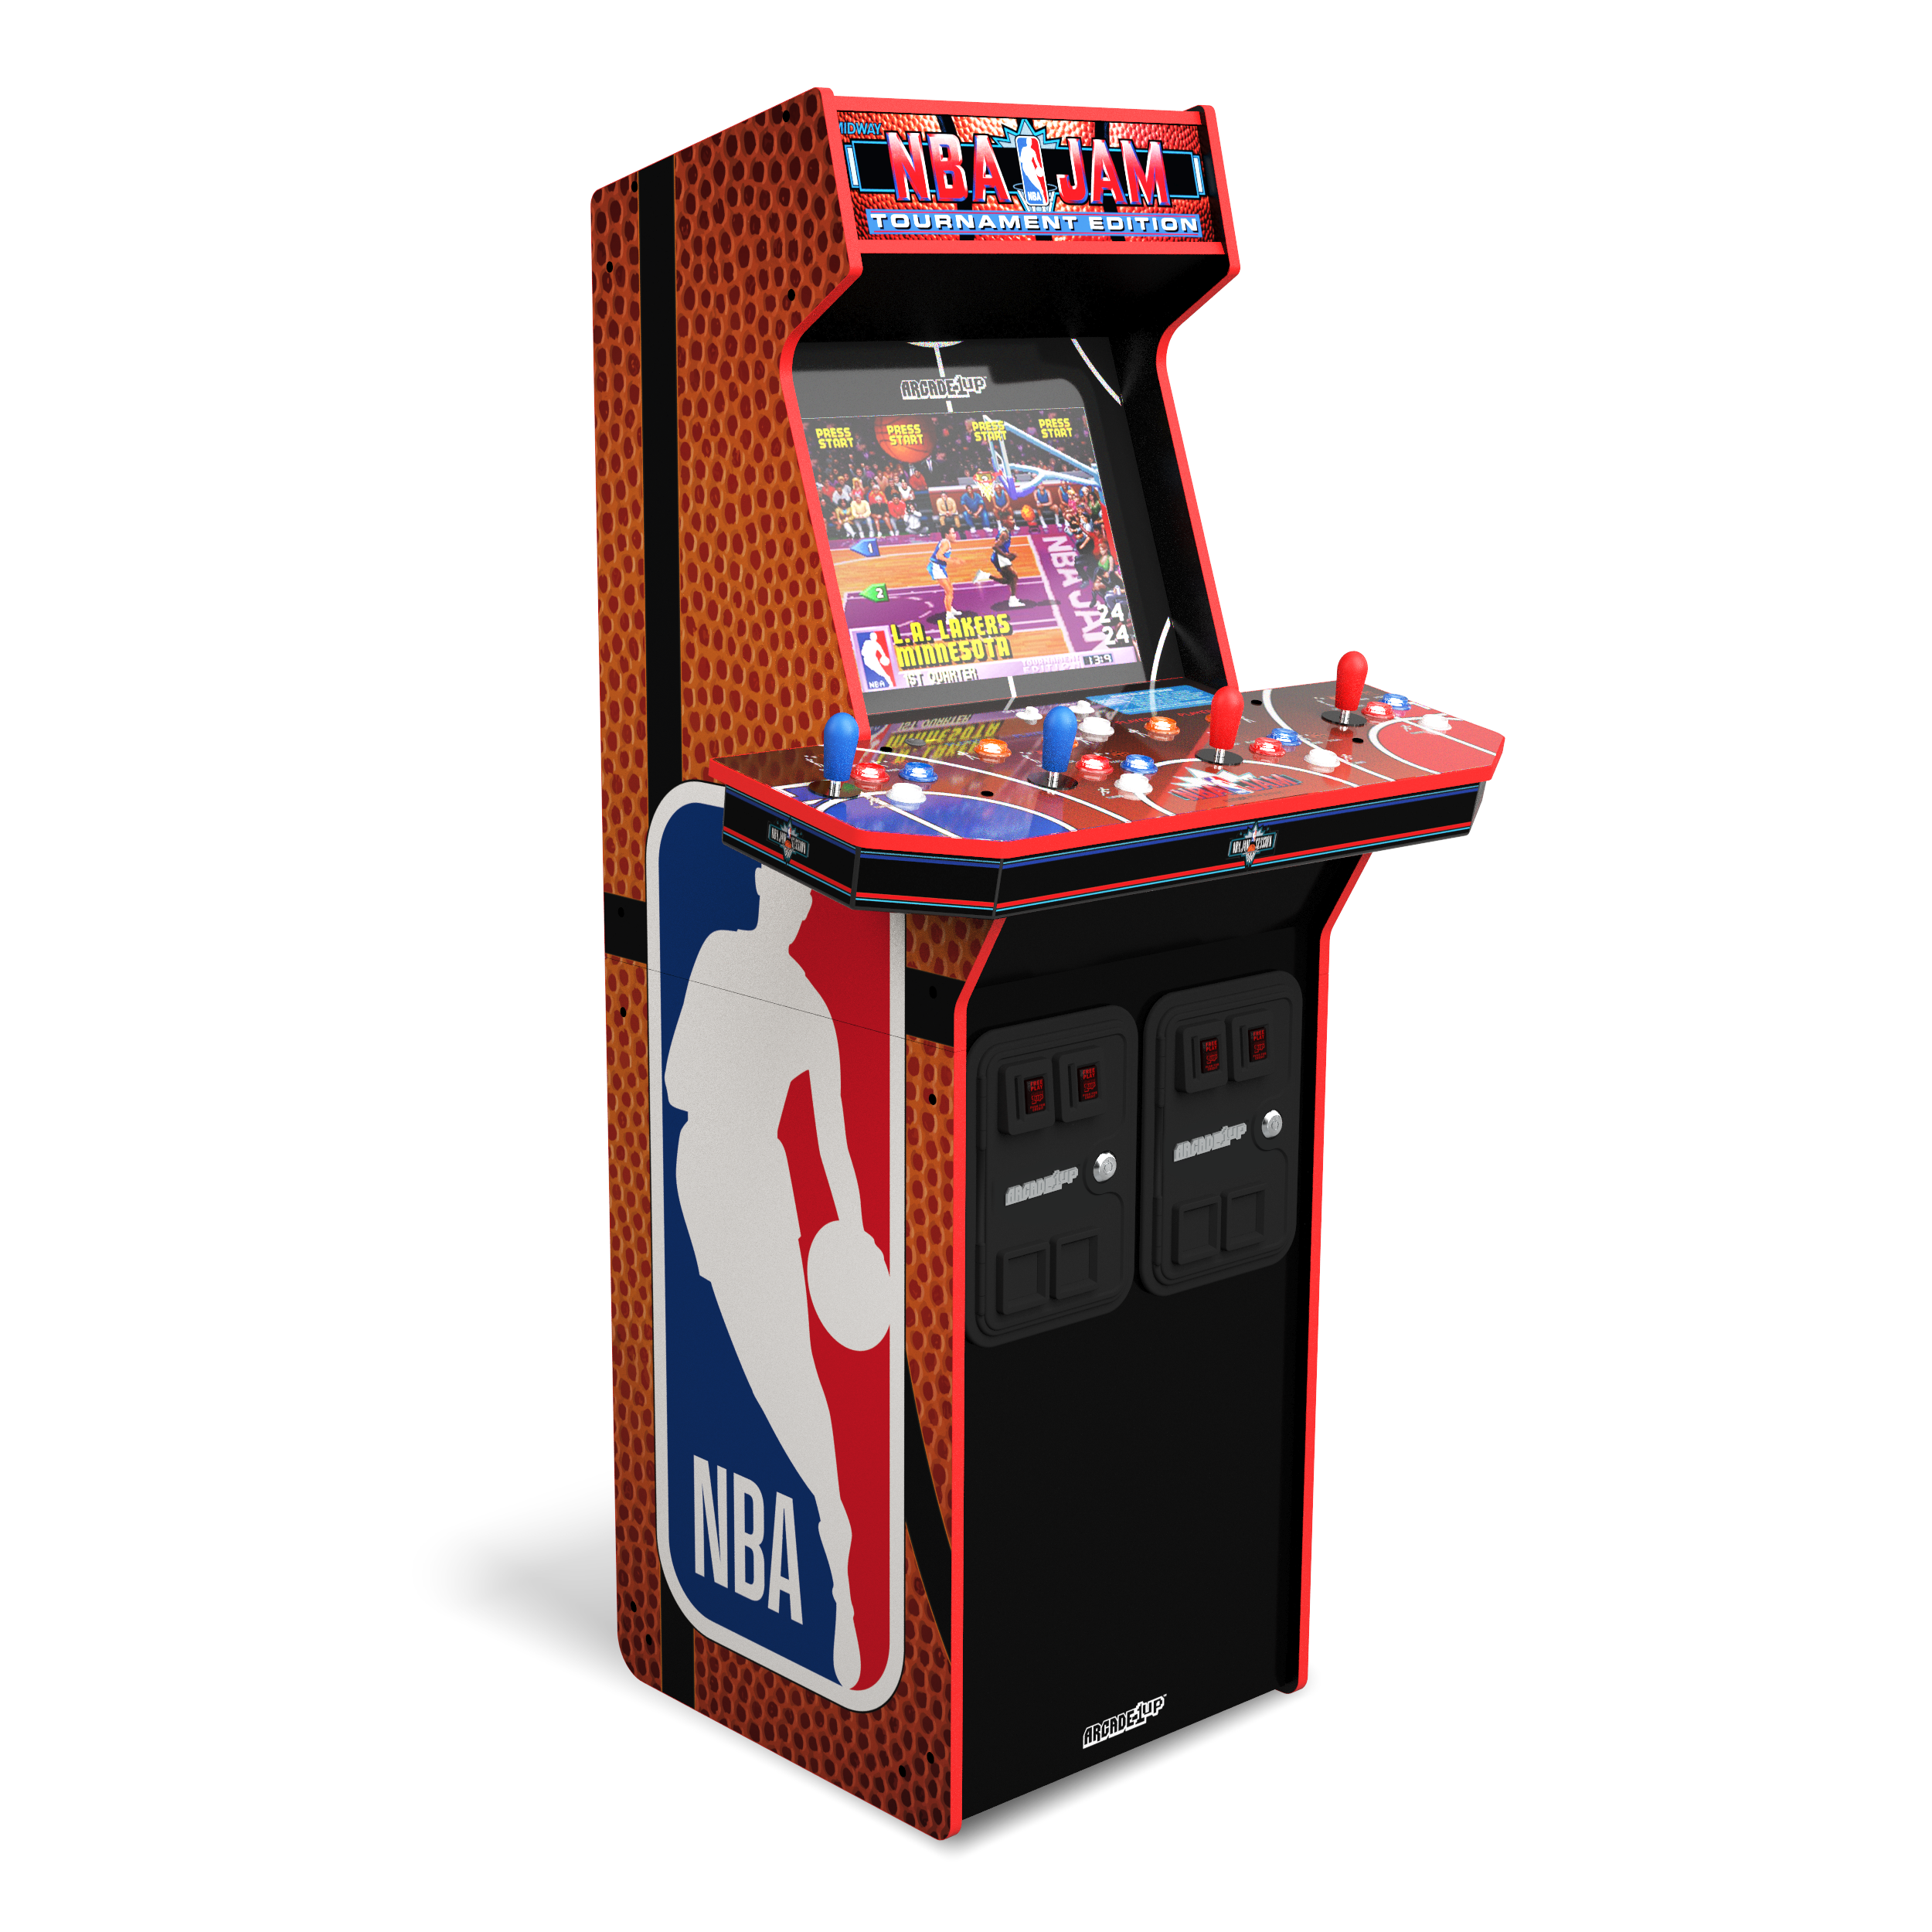 Arcade1Up NBA Jam 30th Anniversary Deluxe Arcade Machine 3 Games in 1